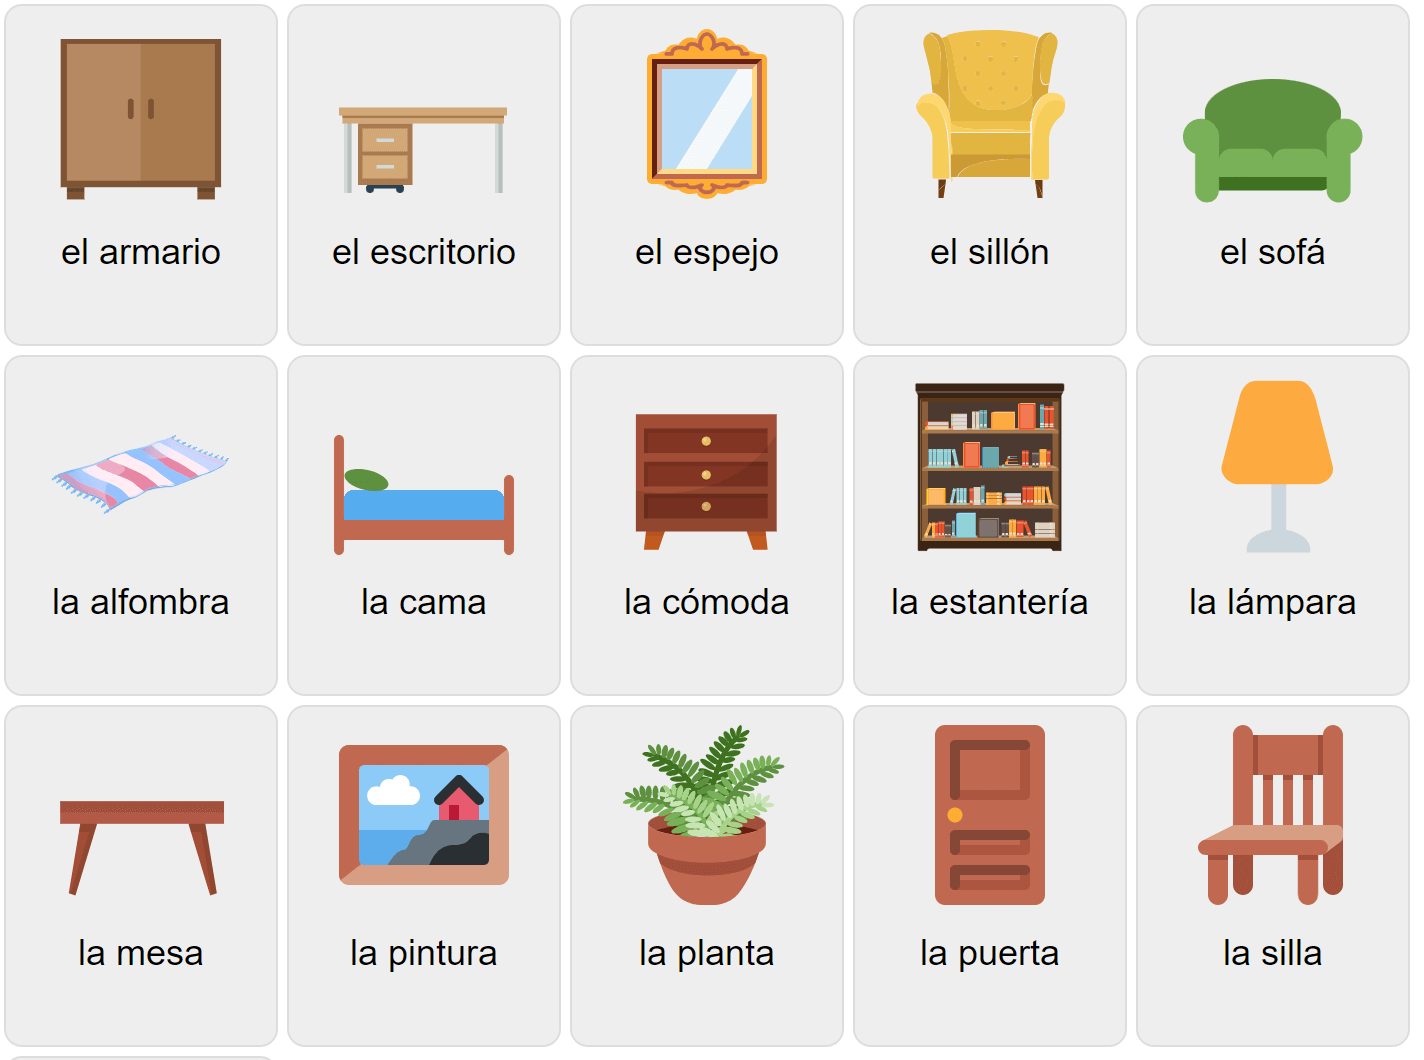 Furniture in Spanish